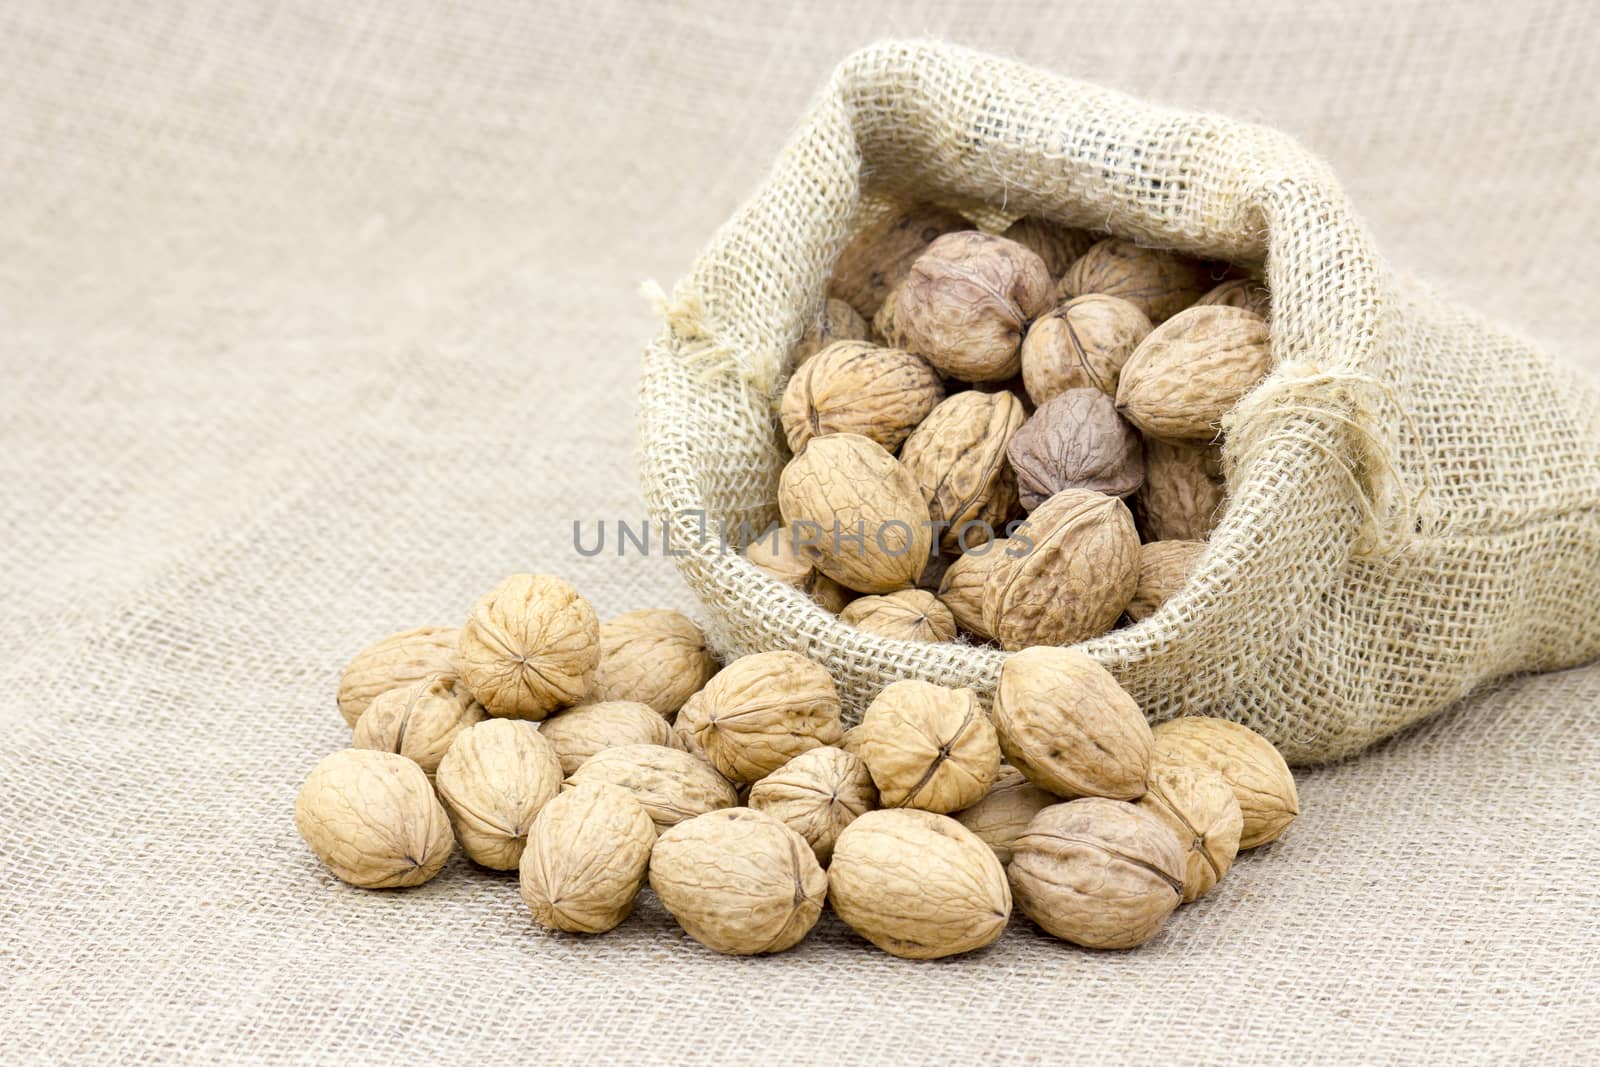 Burlap sack full of whole walnuts by miradrozdowski